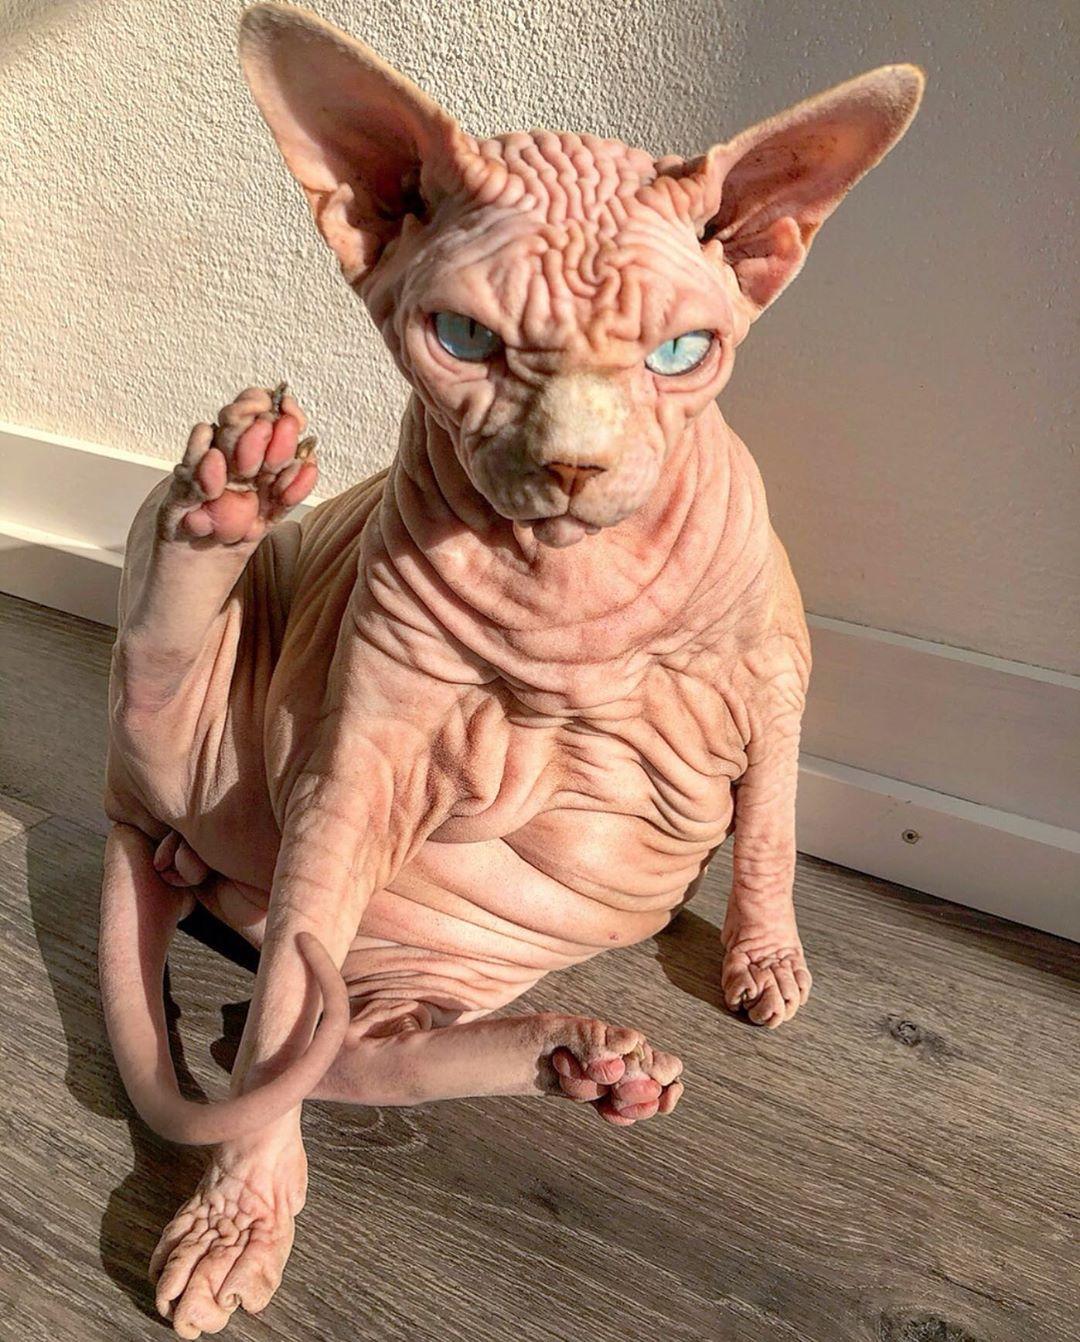 (Courtesy of <a href="https://www.xherdanthenakedcat.com/">Xherdan the naked Cat</a>)